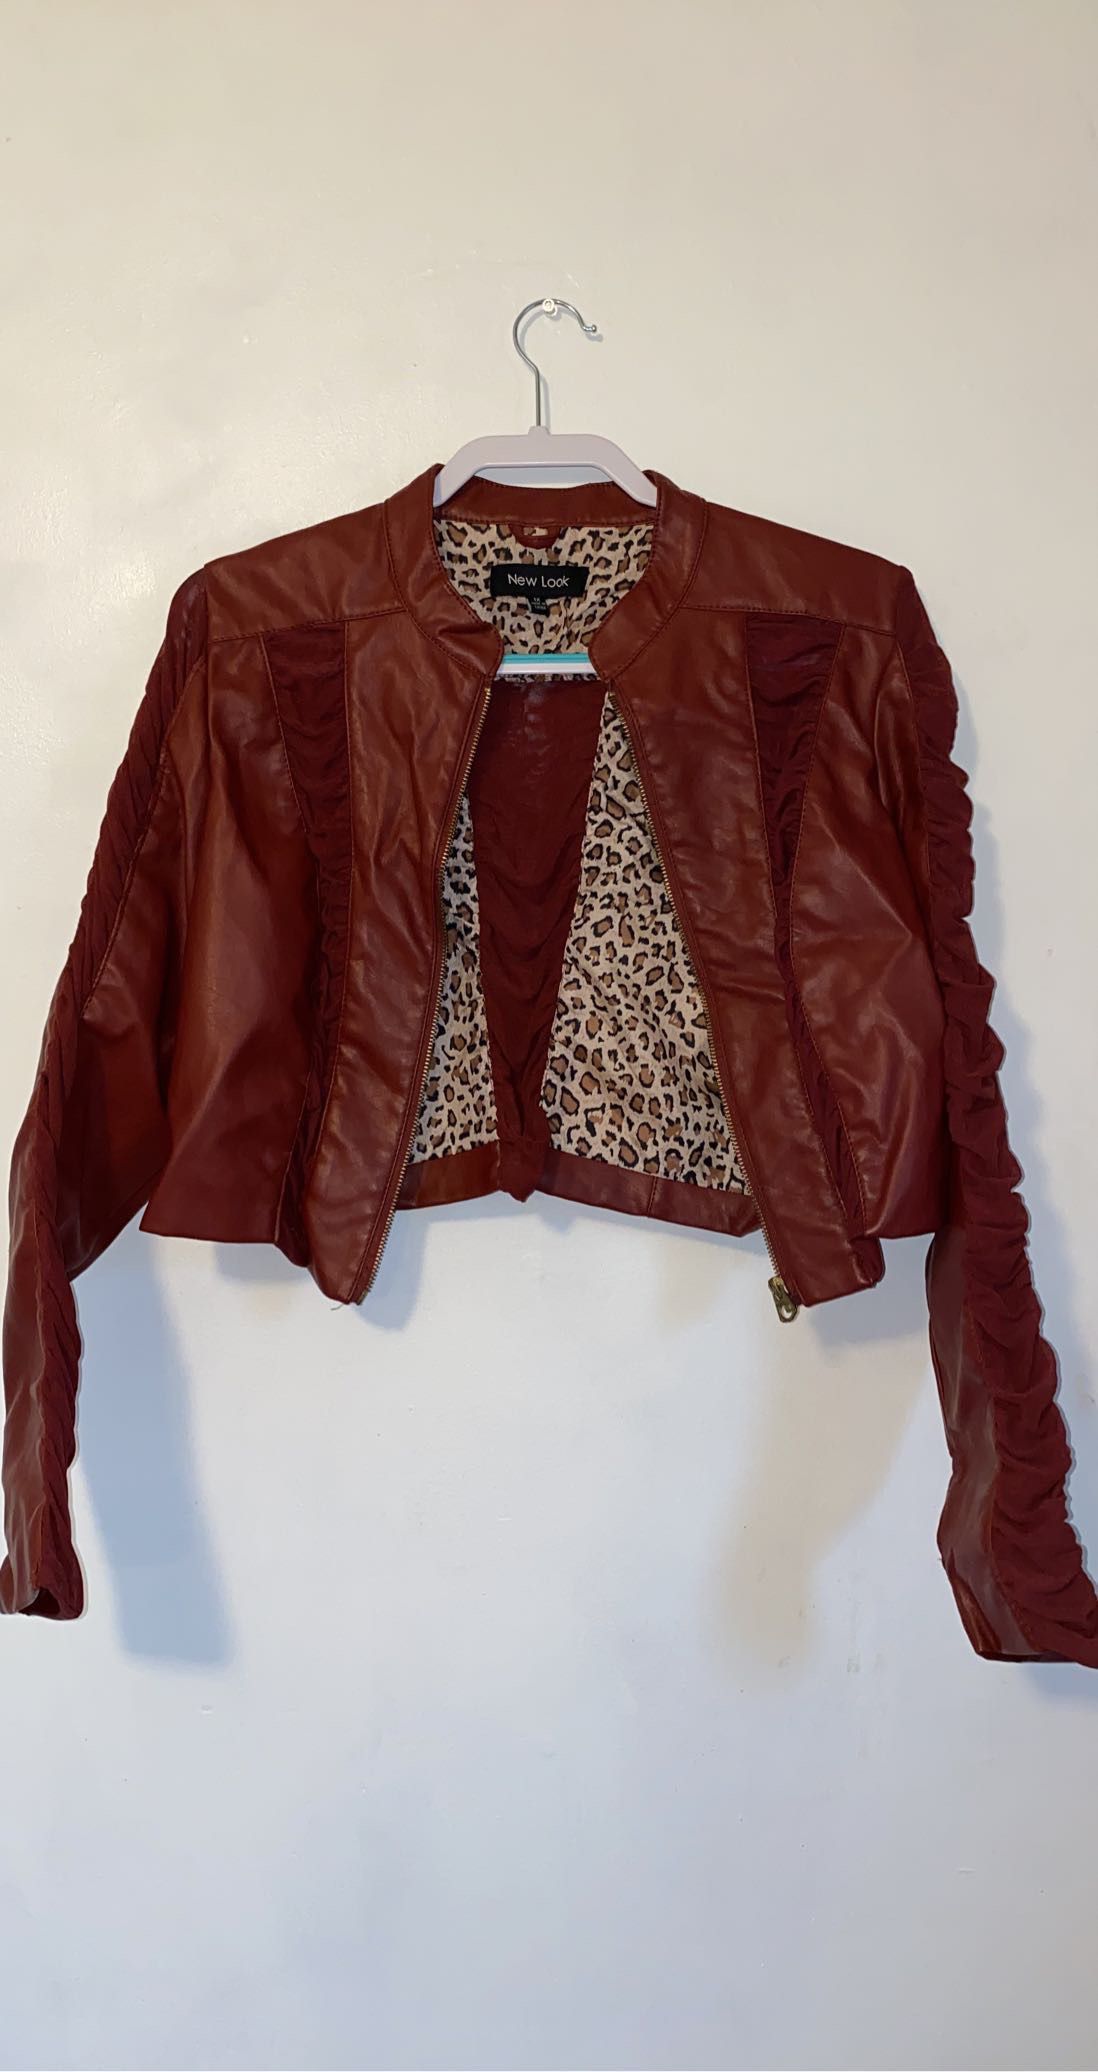 Cropped Leather Jacket 